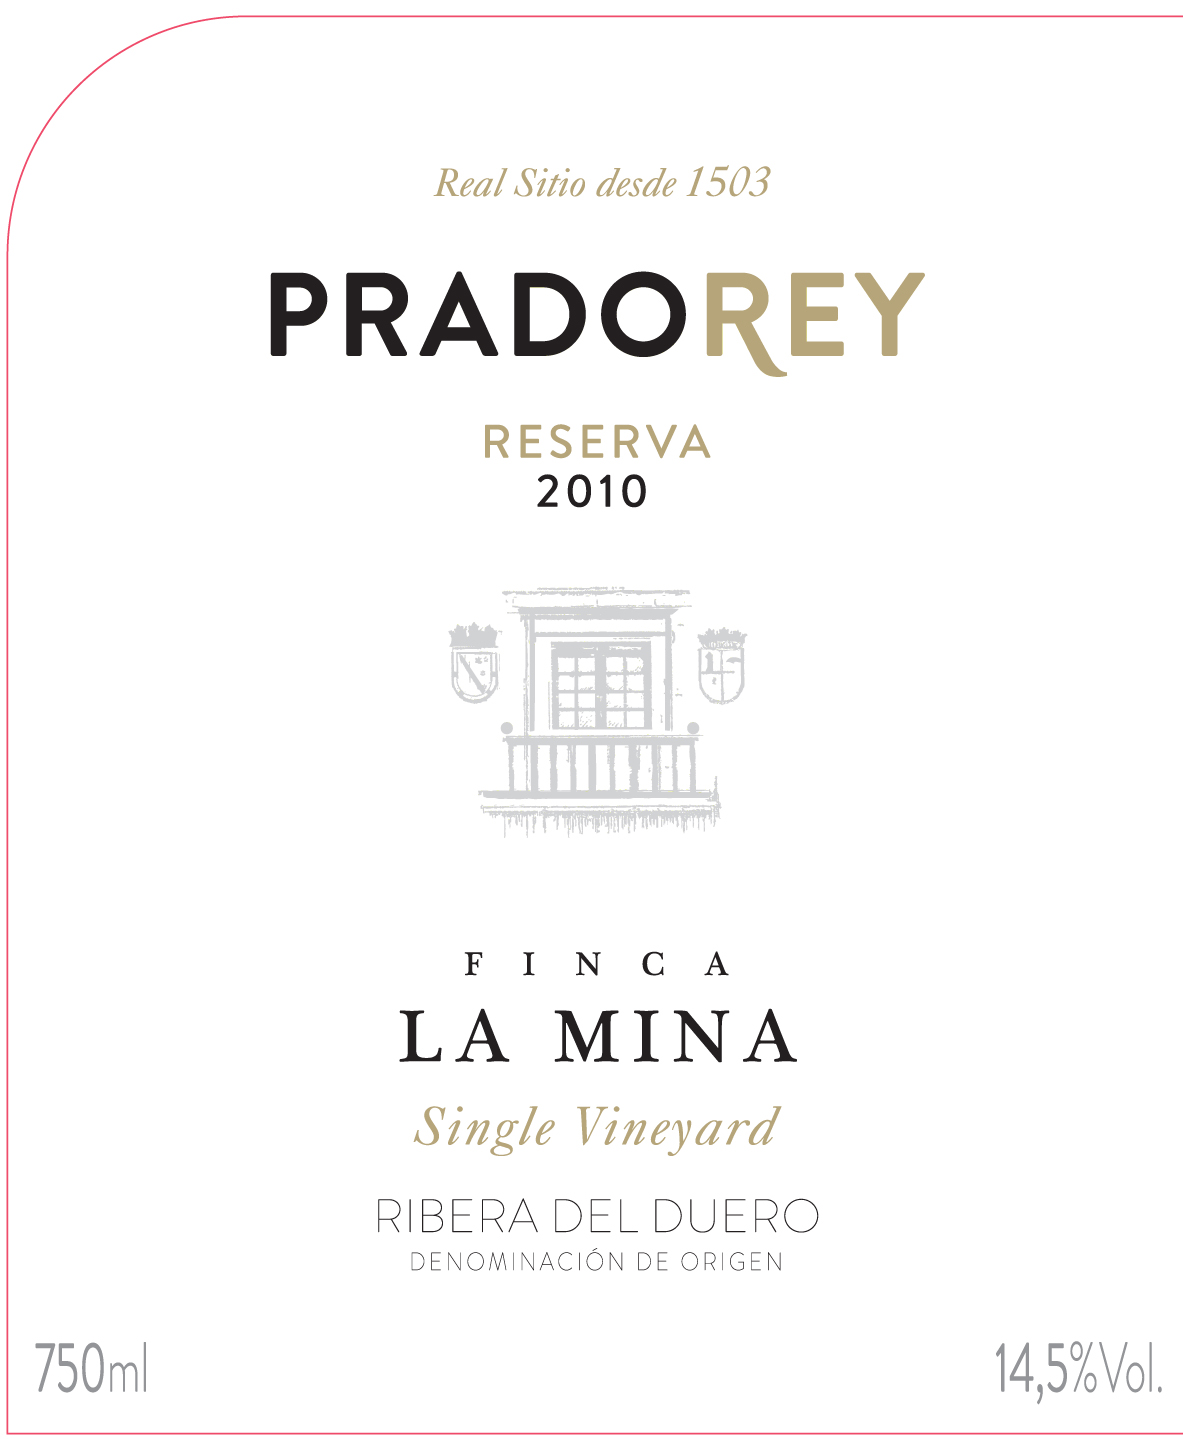 Prado Rey - La Mina Reserva label